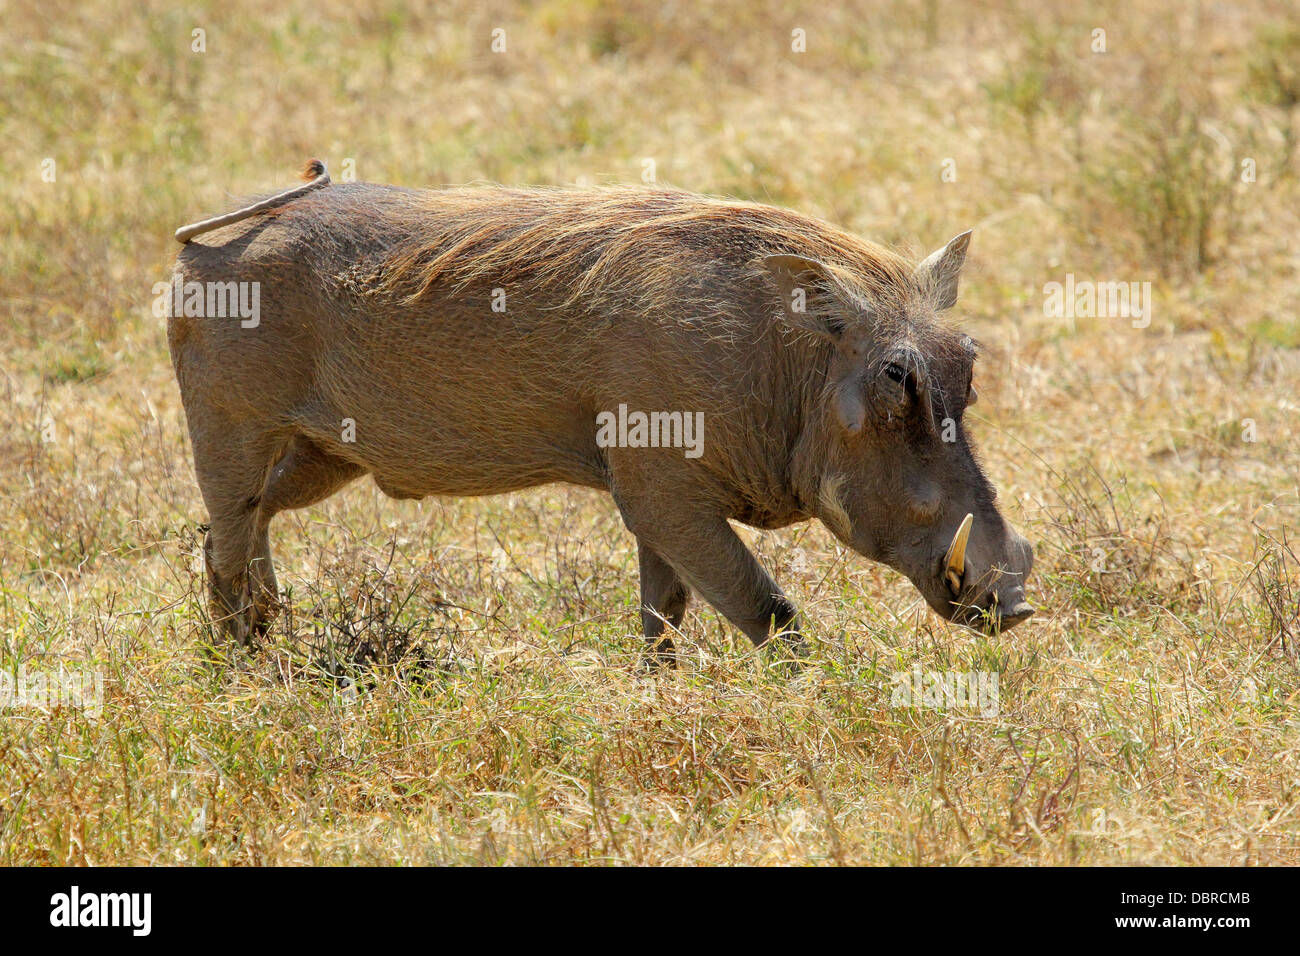 Warthog in serengeti tanzania hi-res stock photography and images - Alamy